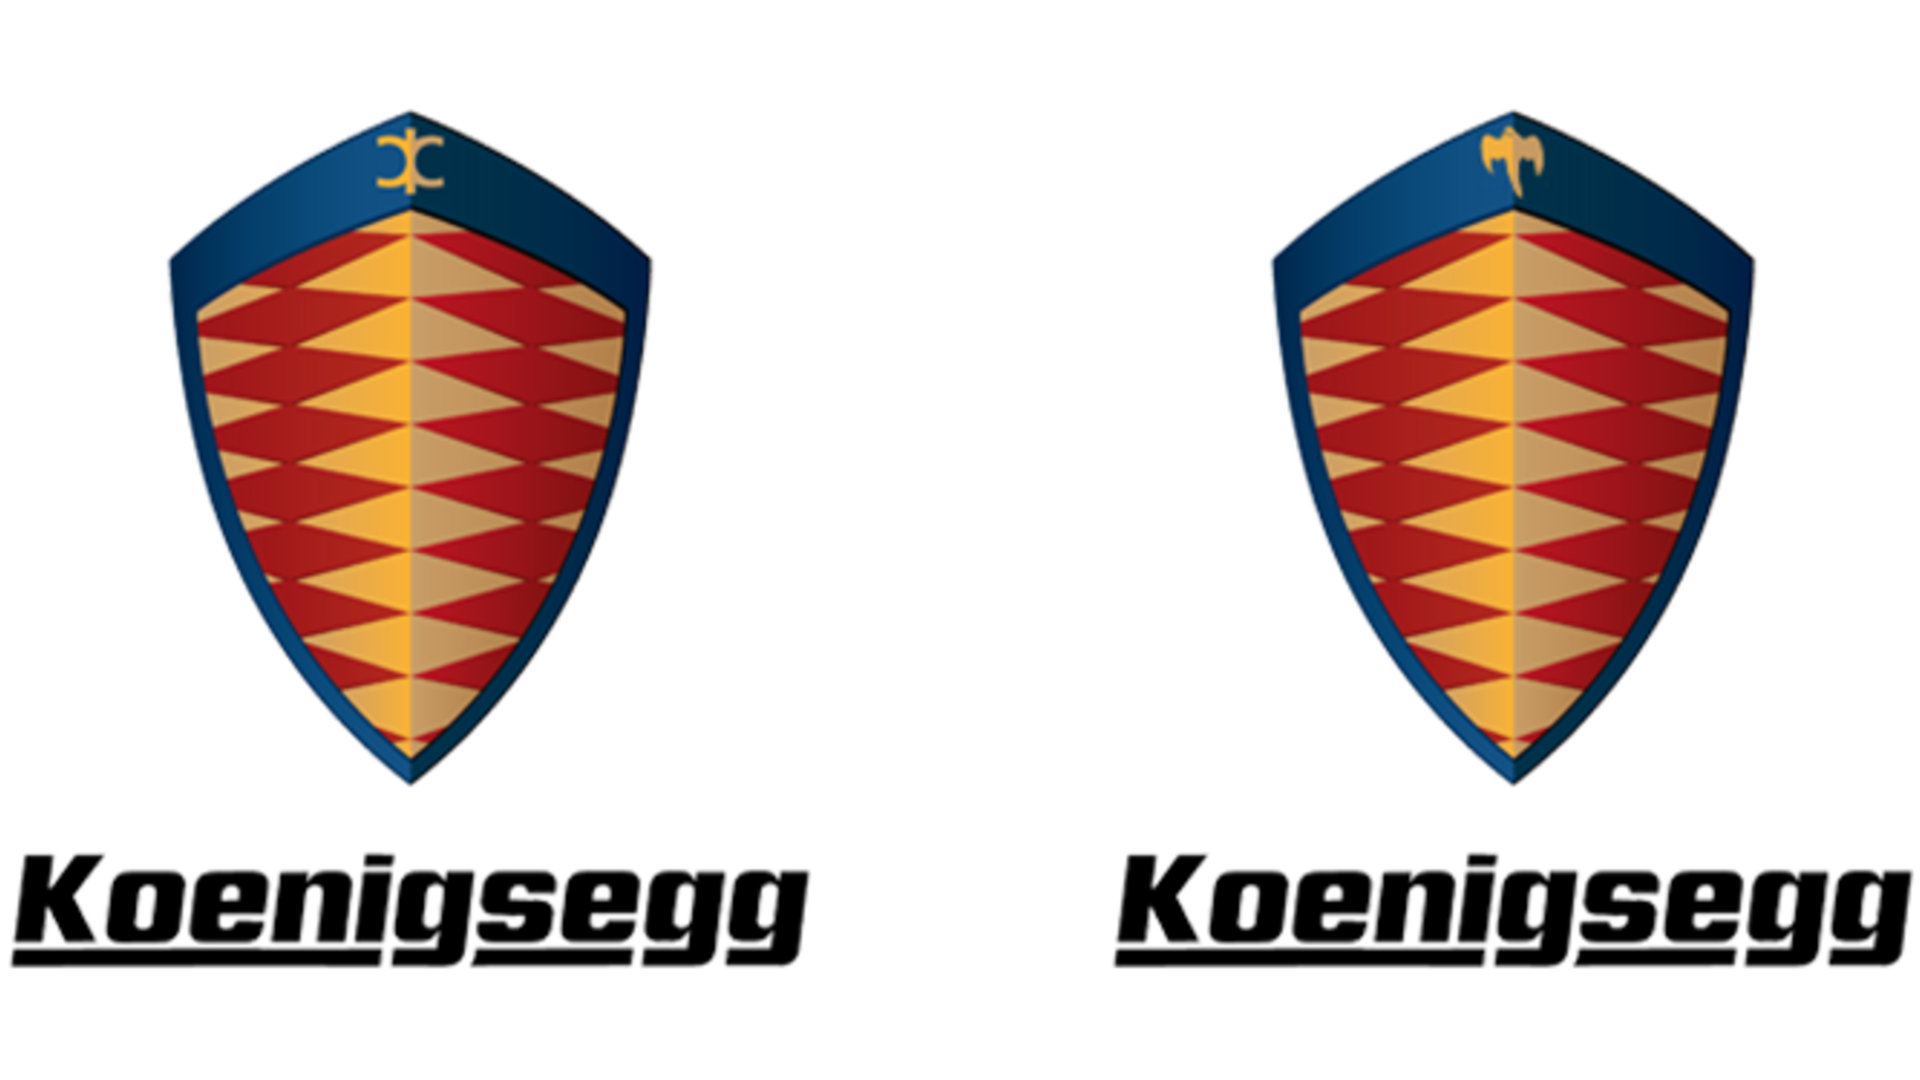 Koenigsegg badge